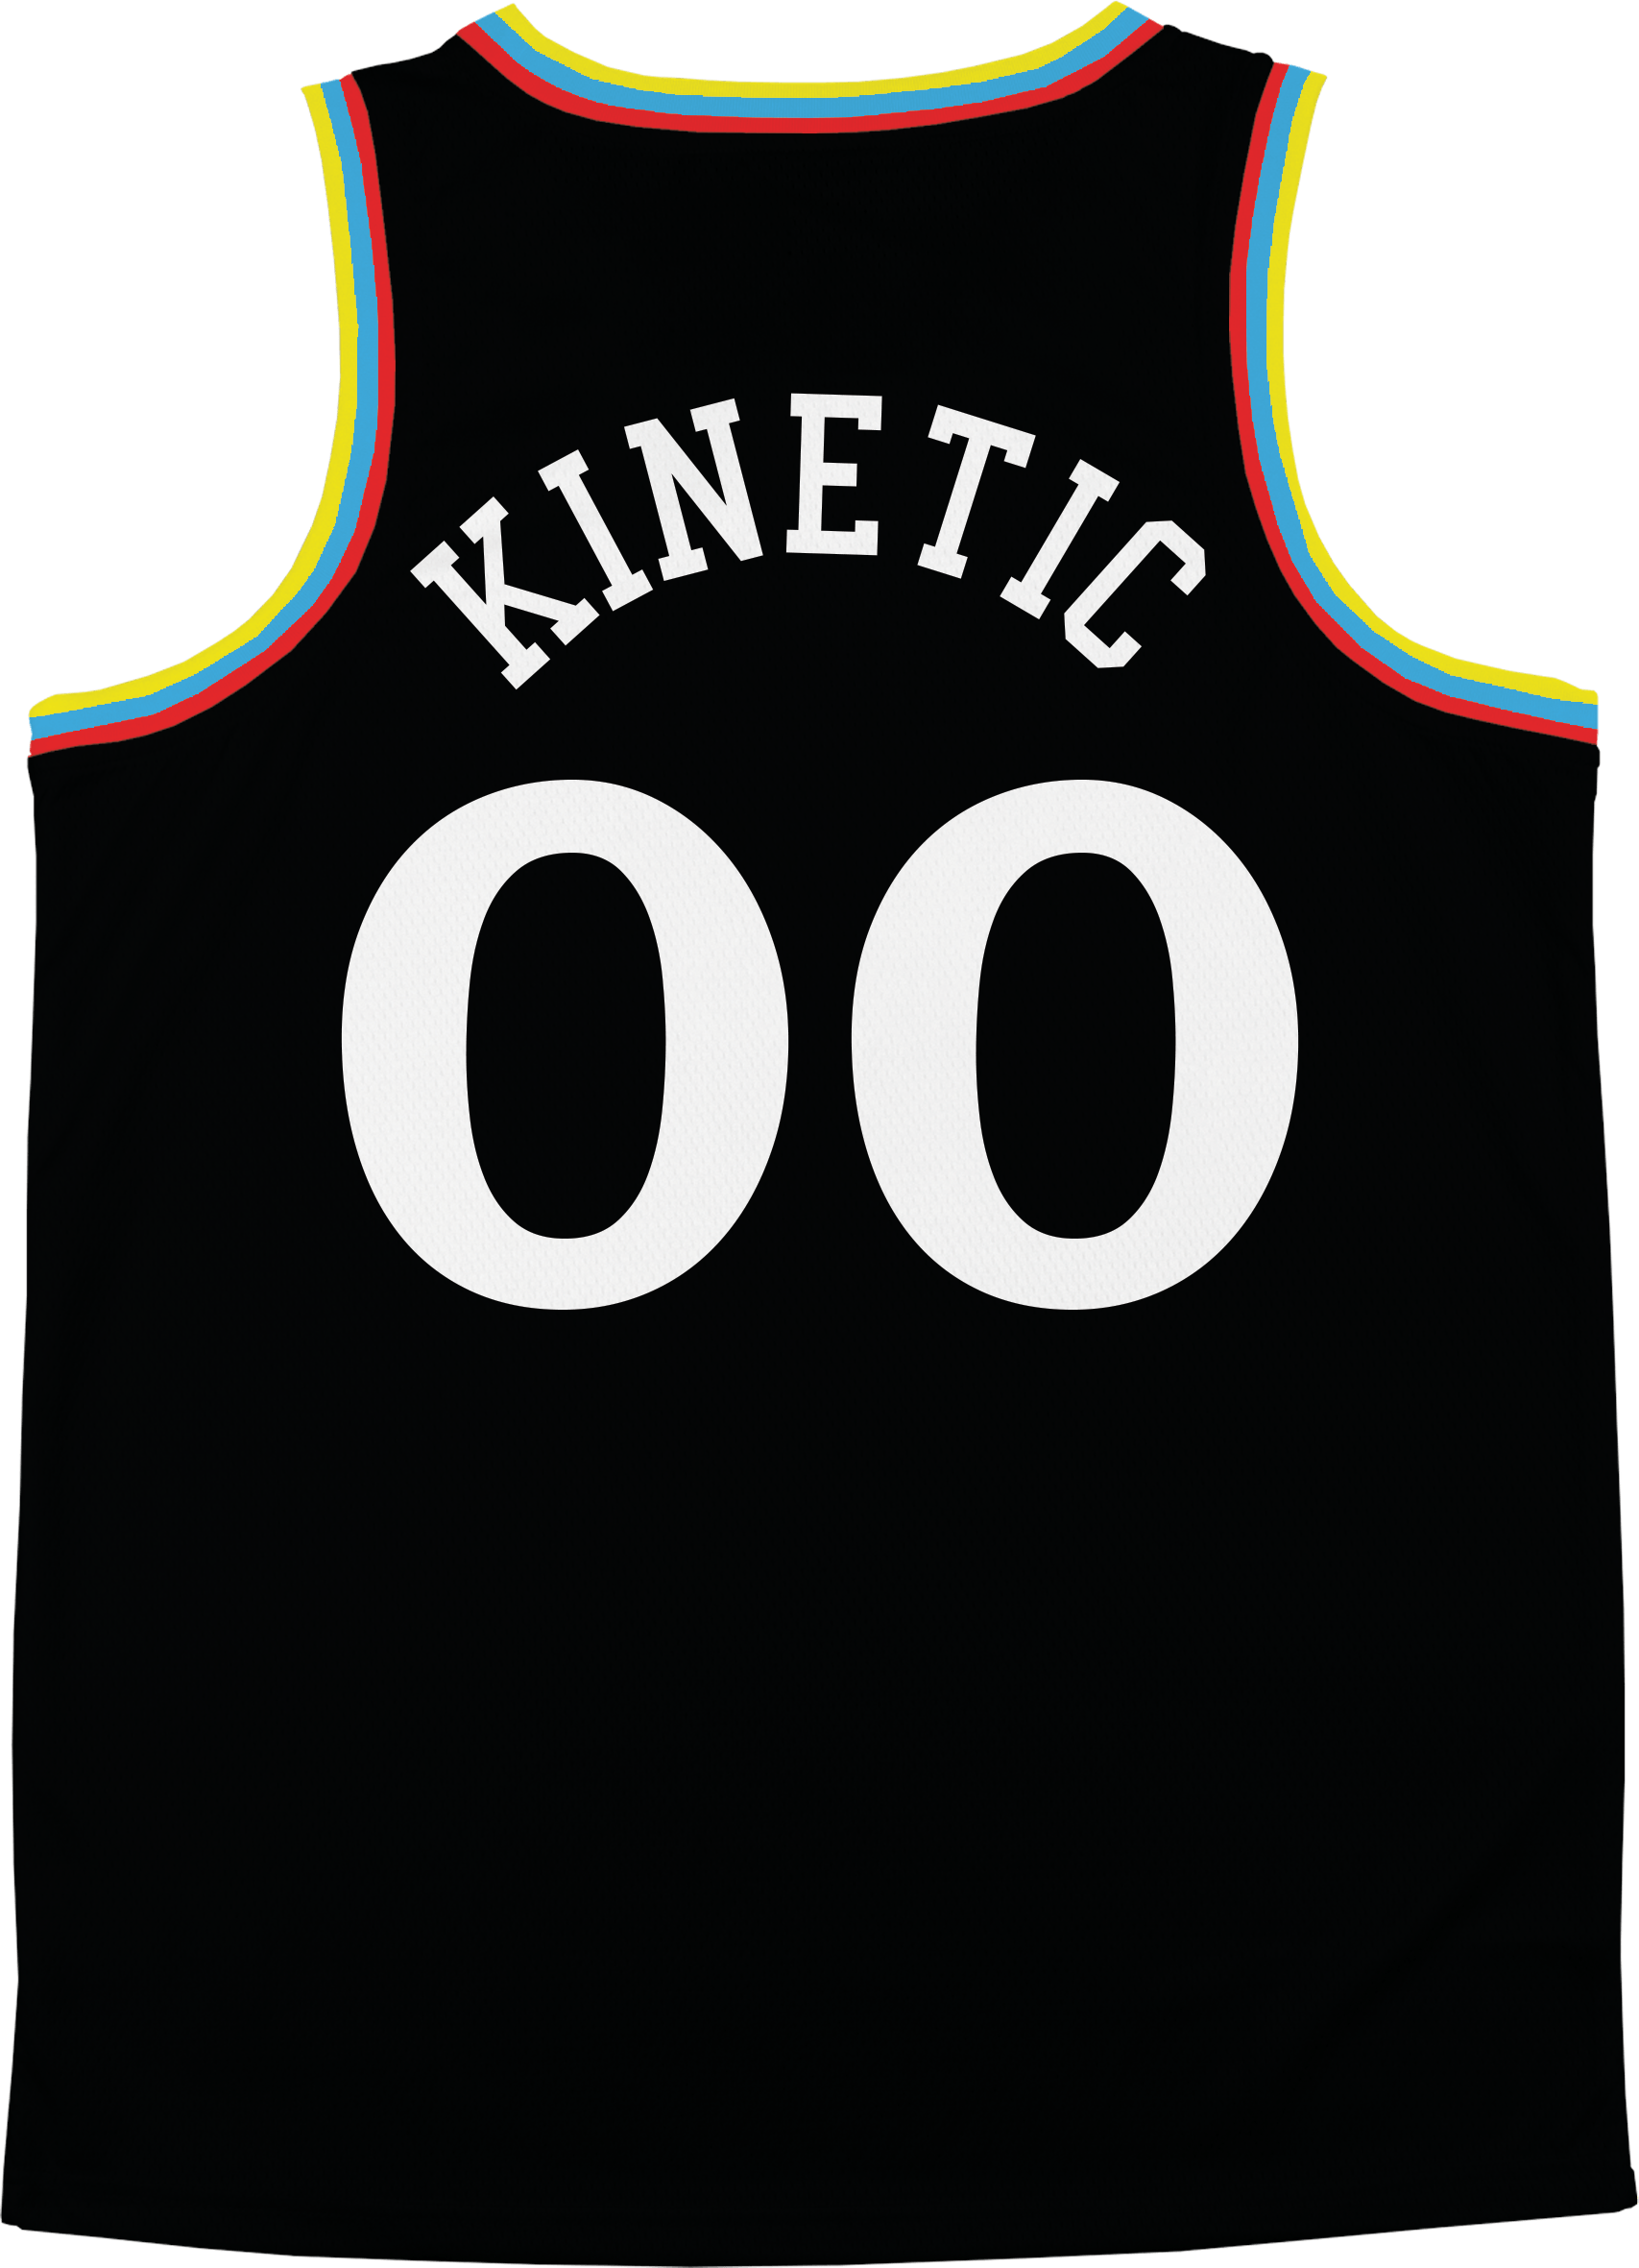 Tau Kappa Epsilon - Crayon House Basketball Jersey - Kinetic Society